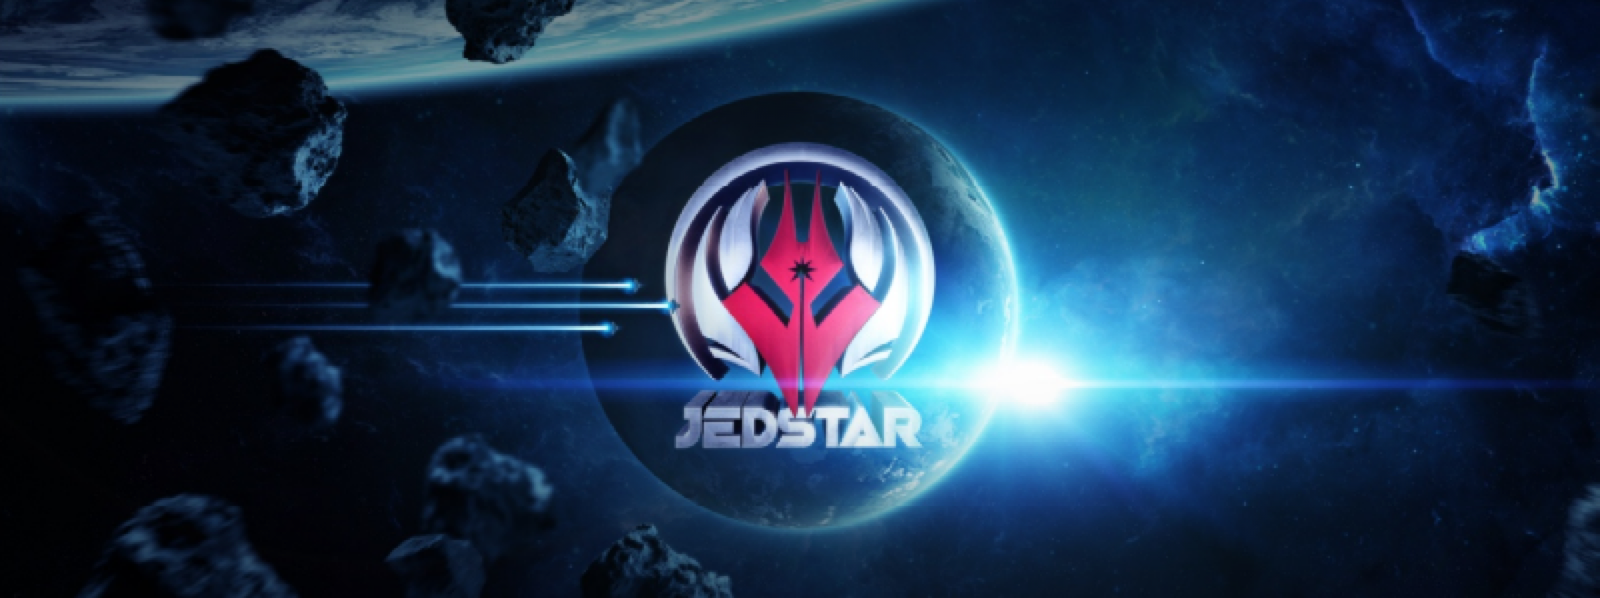 JEDSTAR Limited, Monday, November 22, 2021, Press release picture